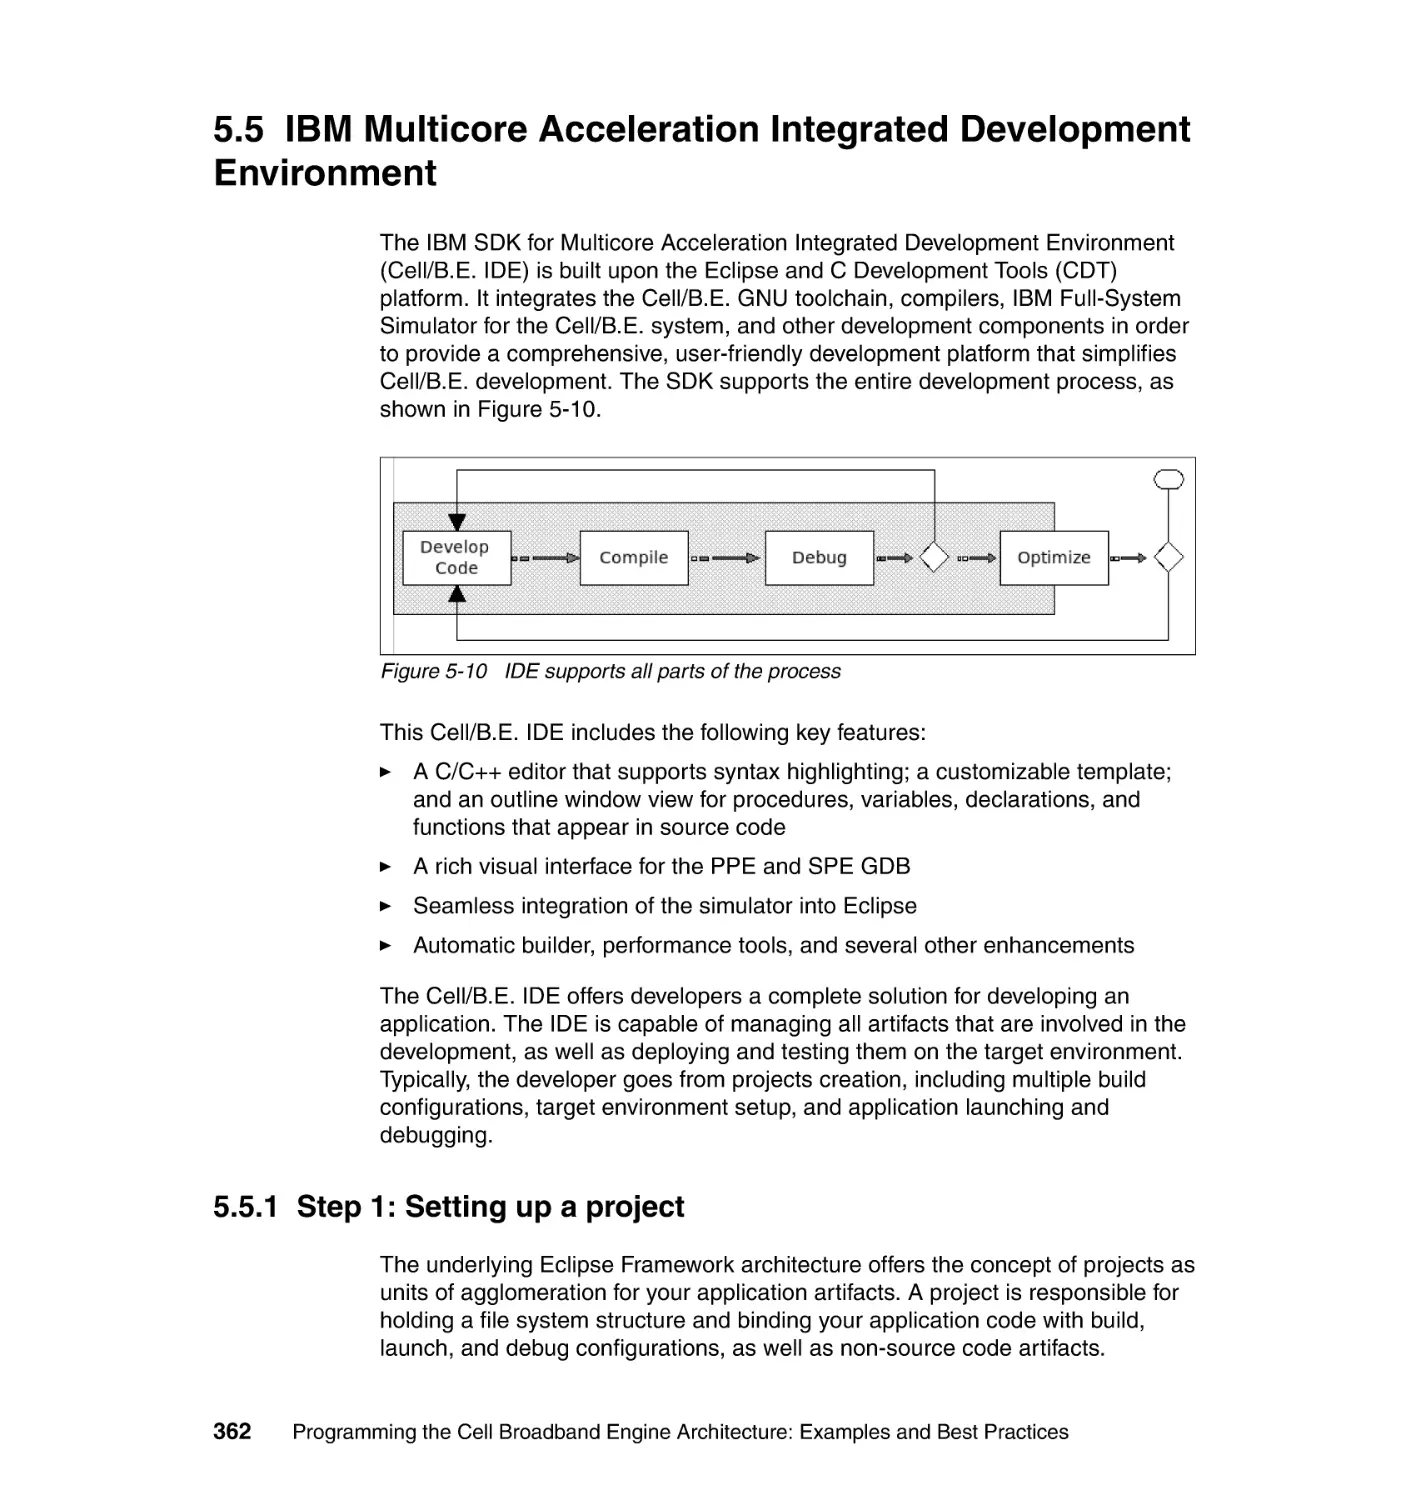 5.5 IBM Multicore Acceleration Integrated Development Environment
5.5.1 Step 1